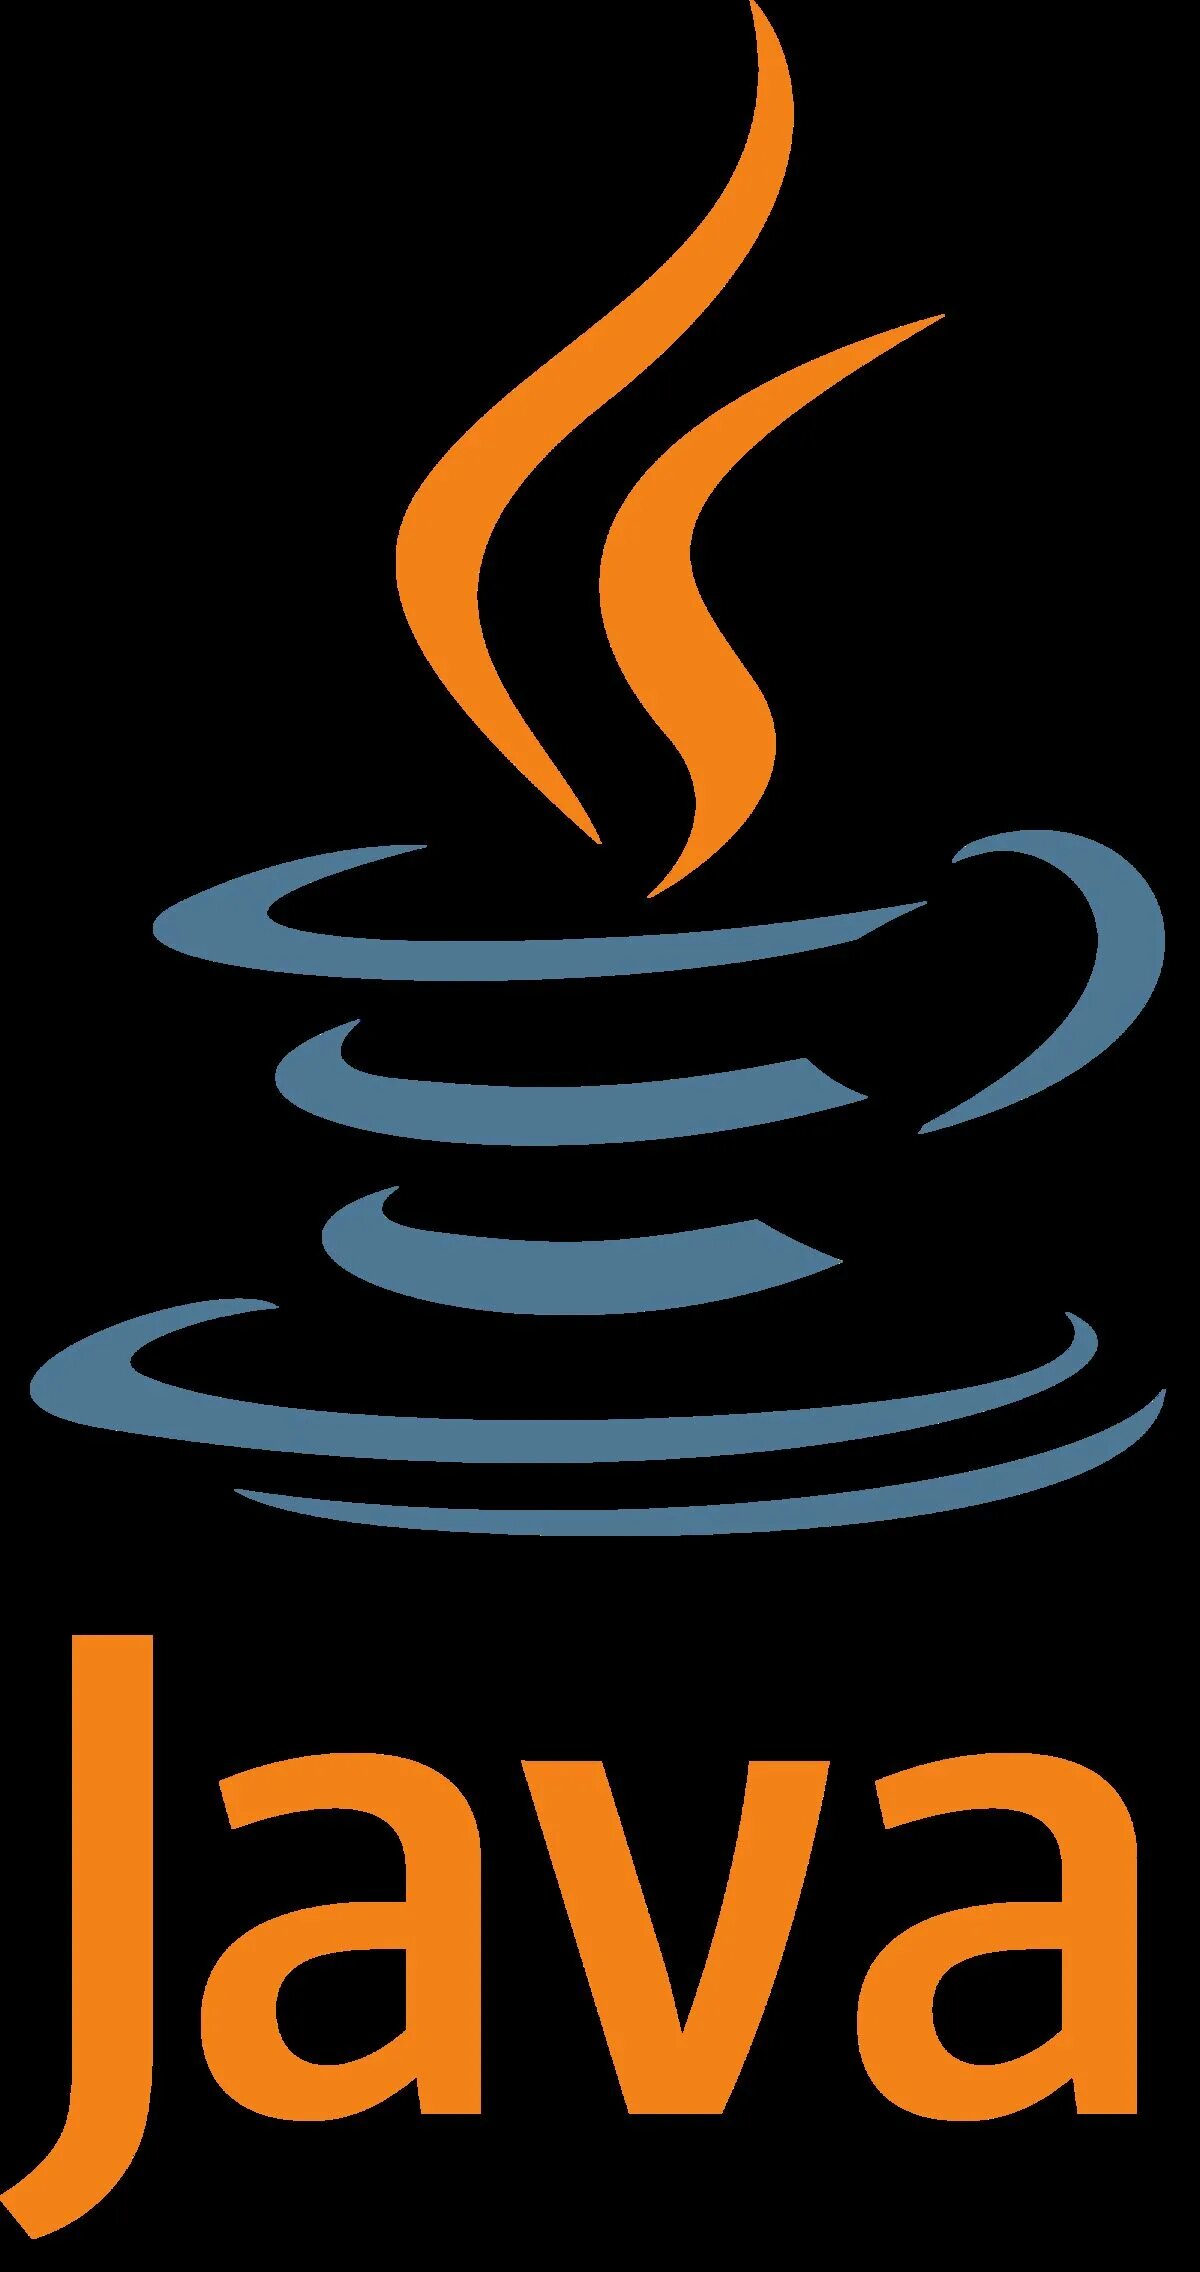 Java язык программирования logo. Значок java. Java картинки. Логотип джава. Картинка java